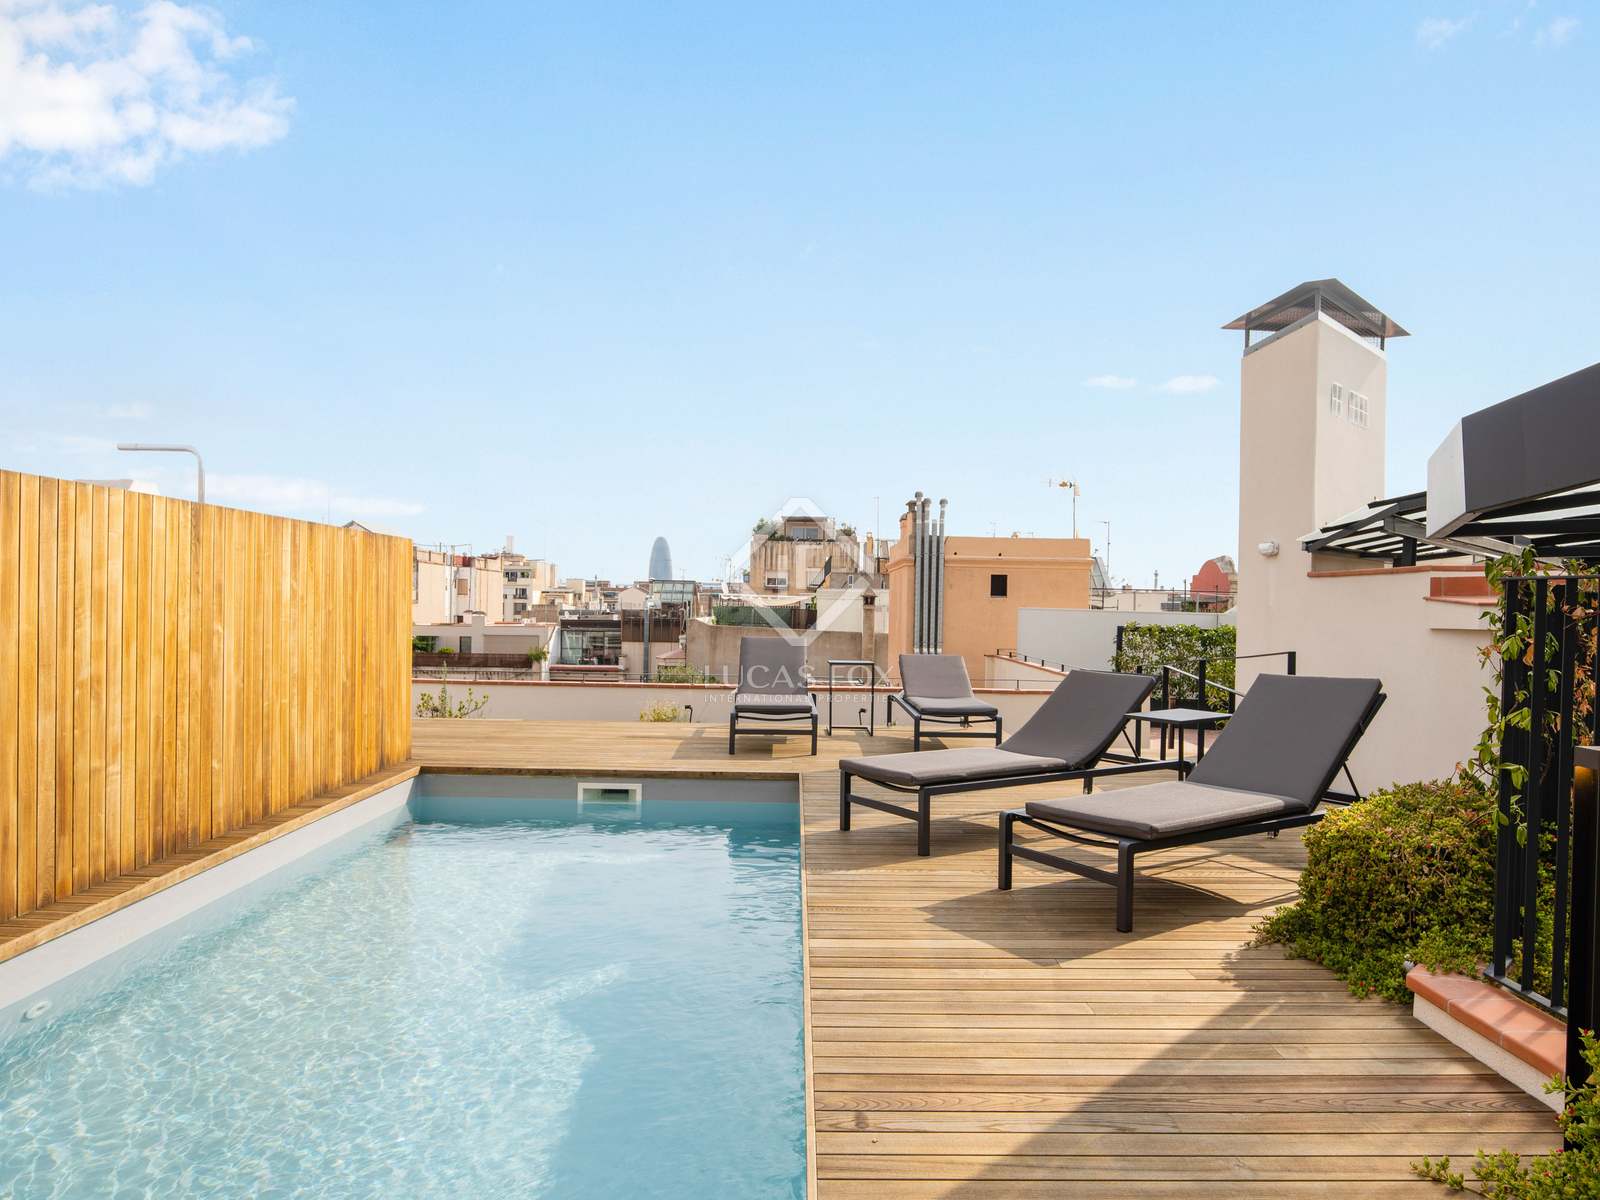 Girona-Apartments New development